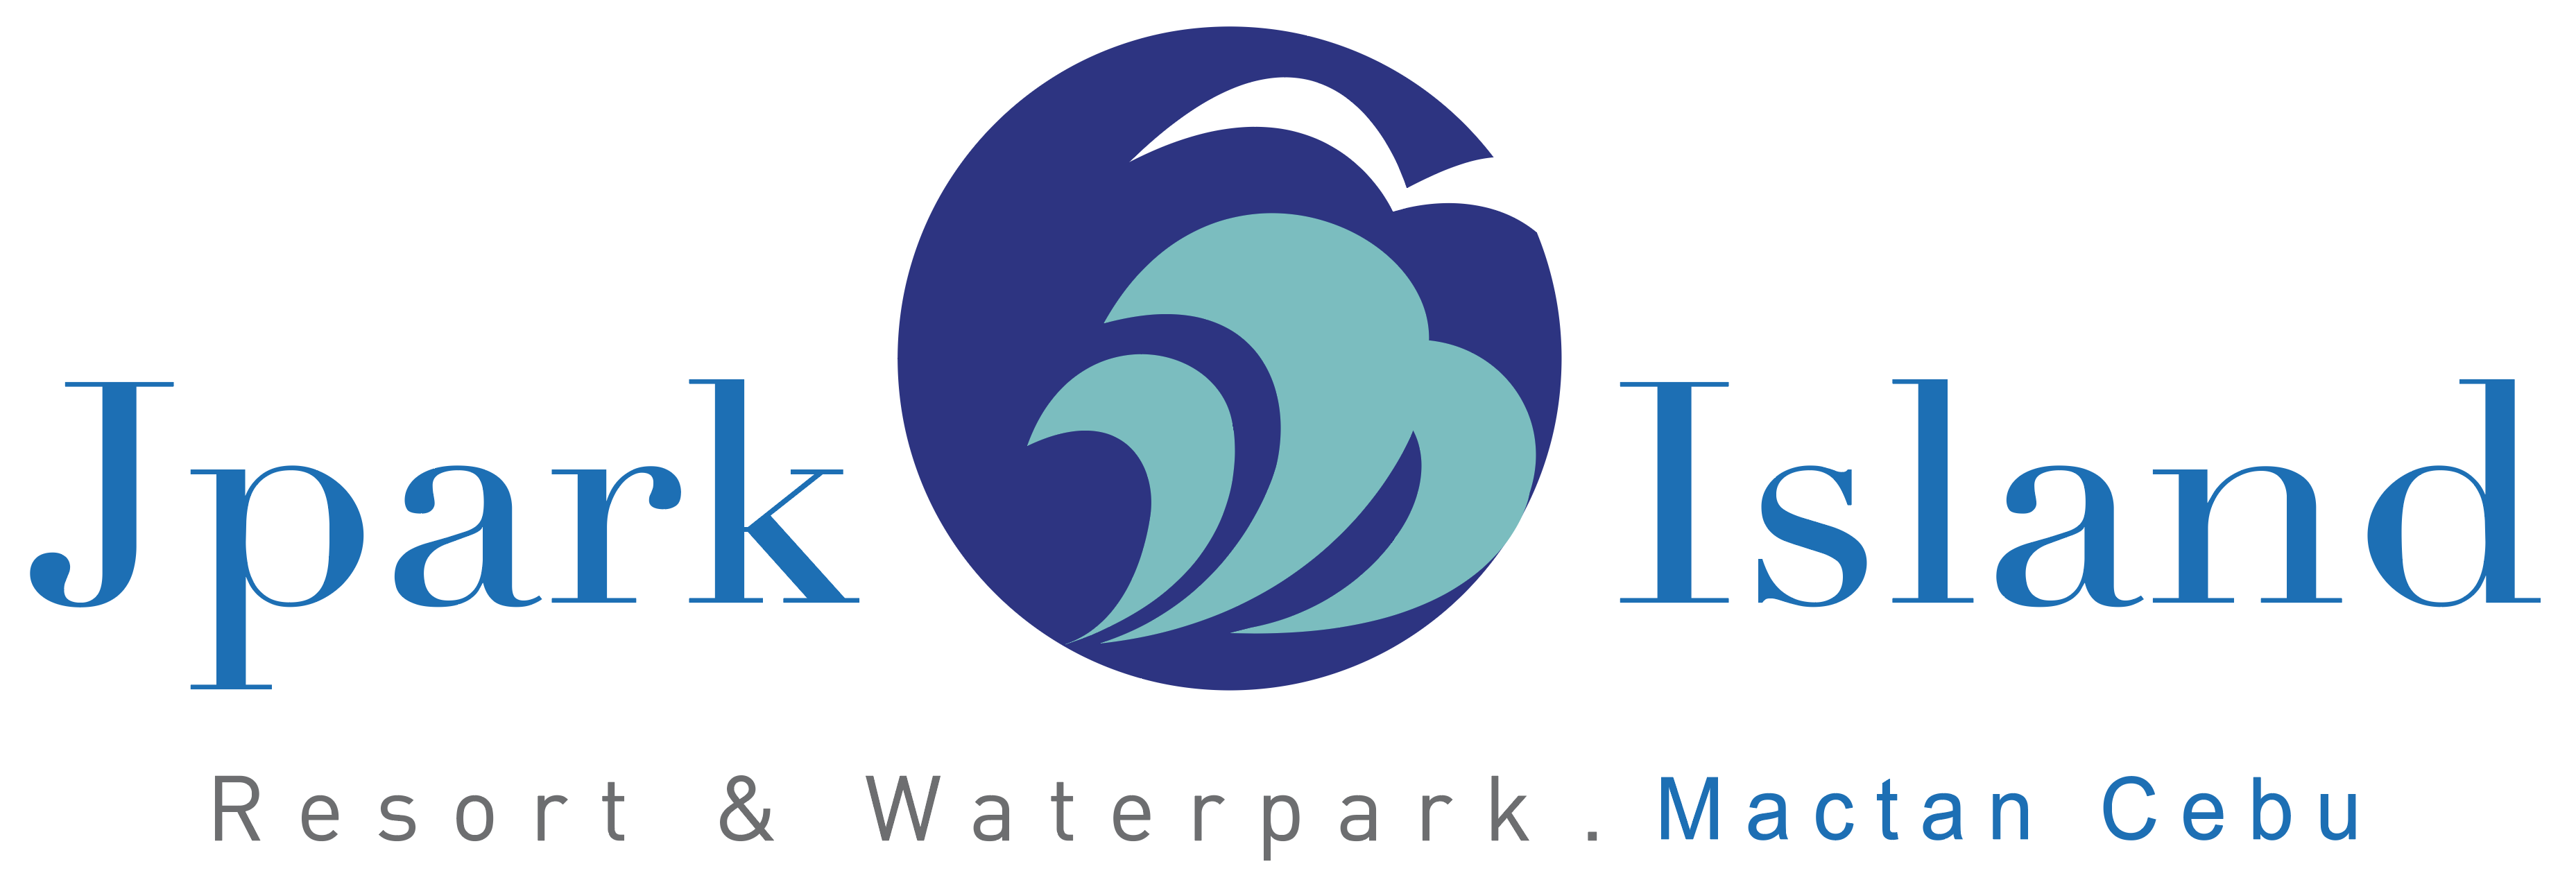 JPark Island Resort and Waterpark